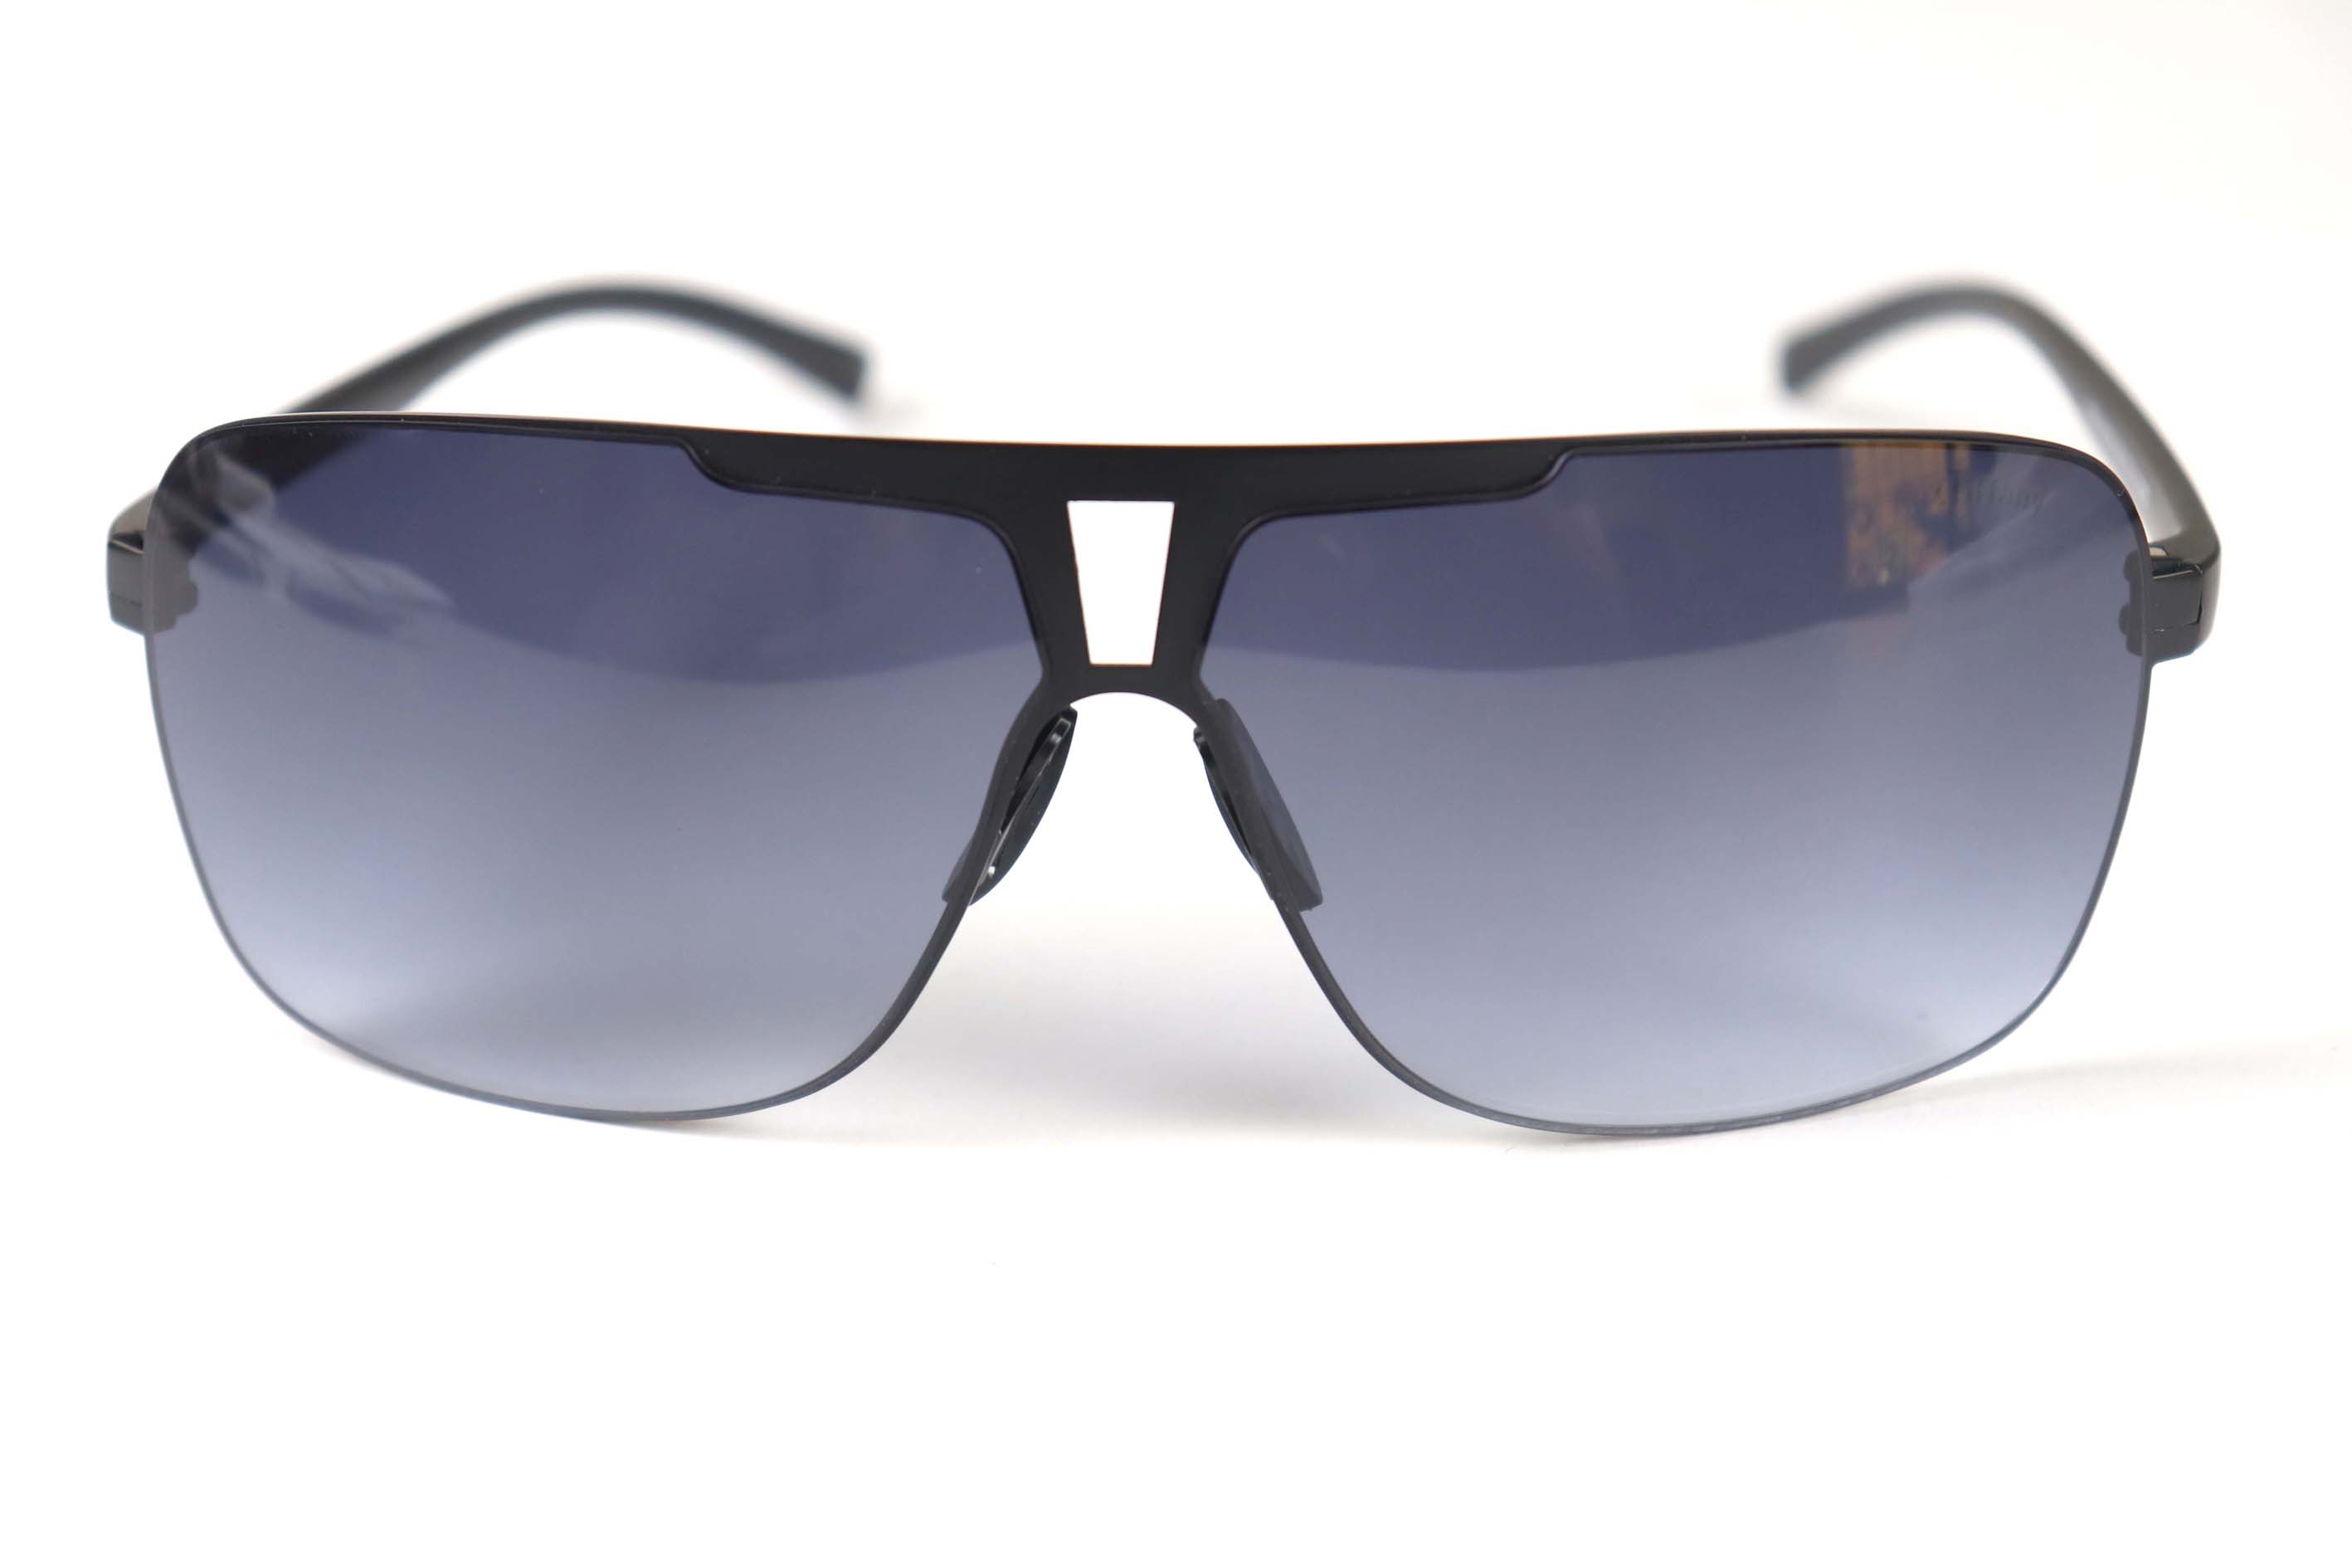 Stiffany Sunglasses-OR-C1.2-S-8135